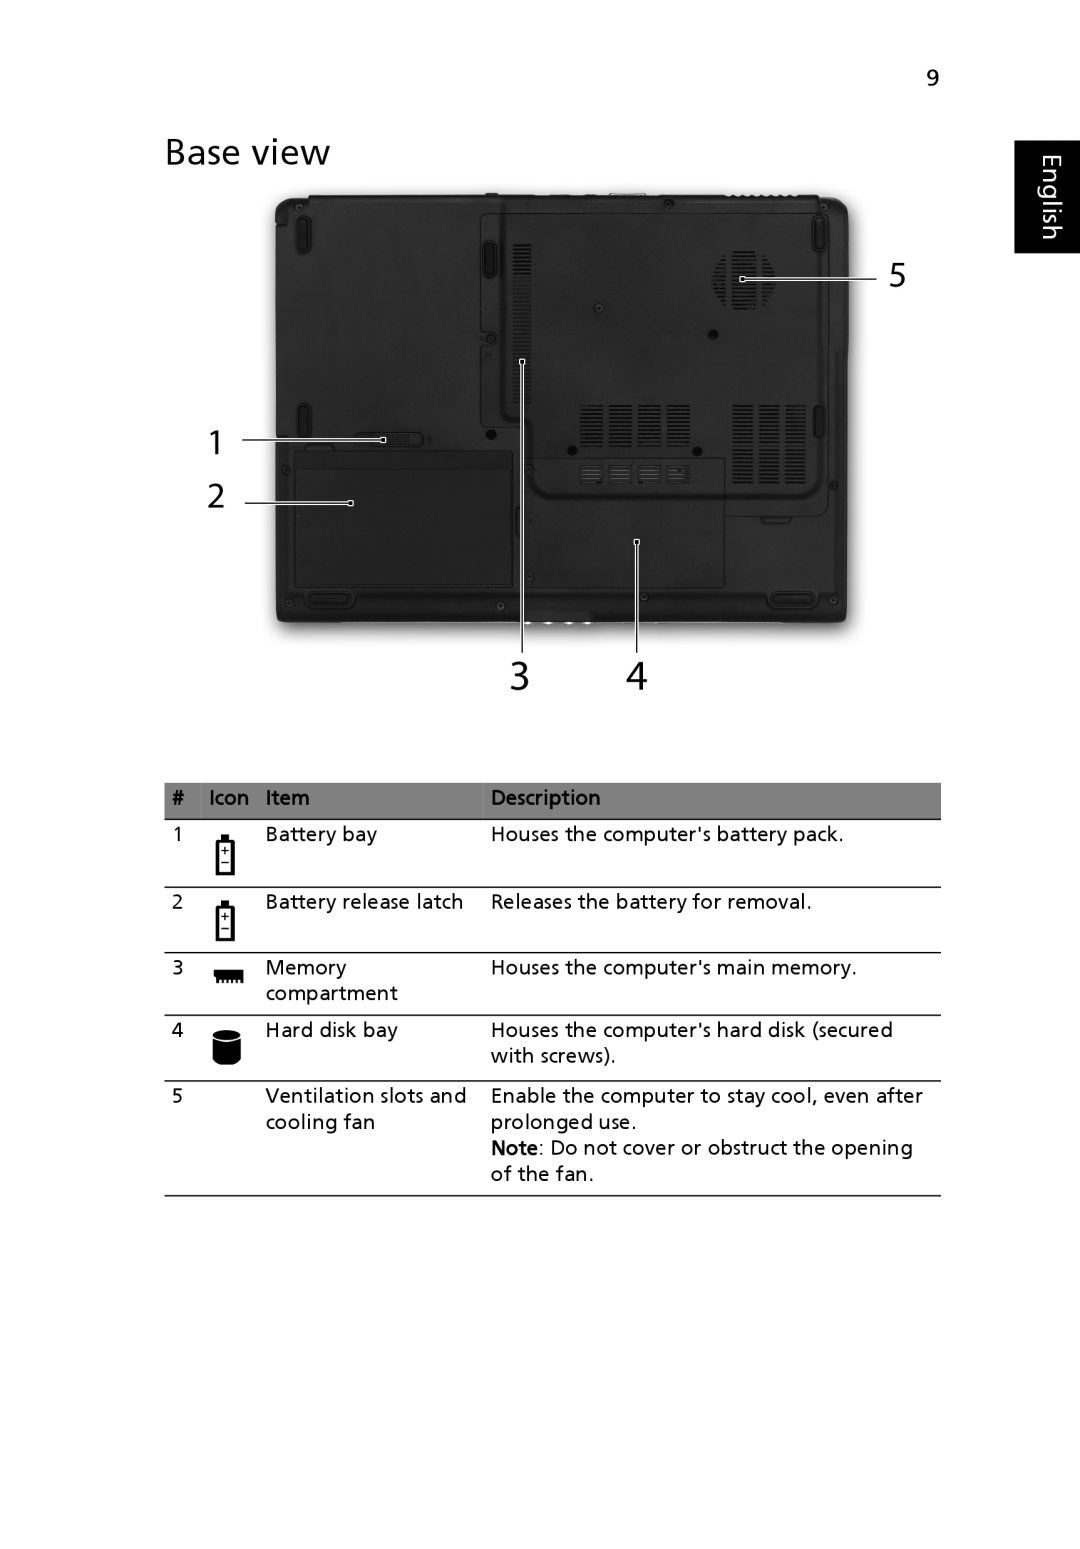 Acer 5515 Series manual Base view, # Icon Item, English, Description 